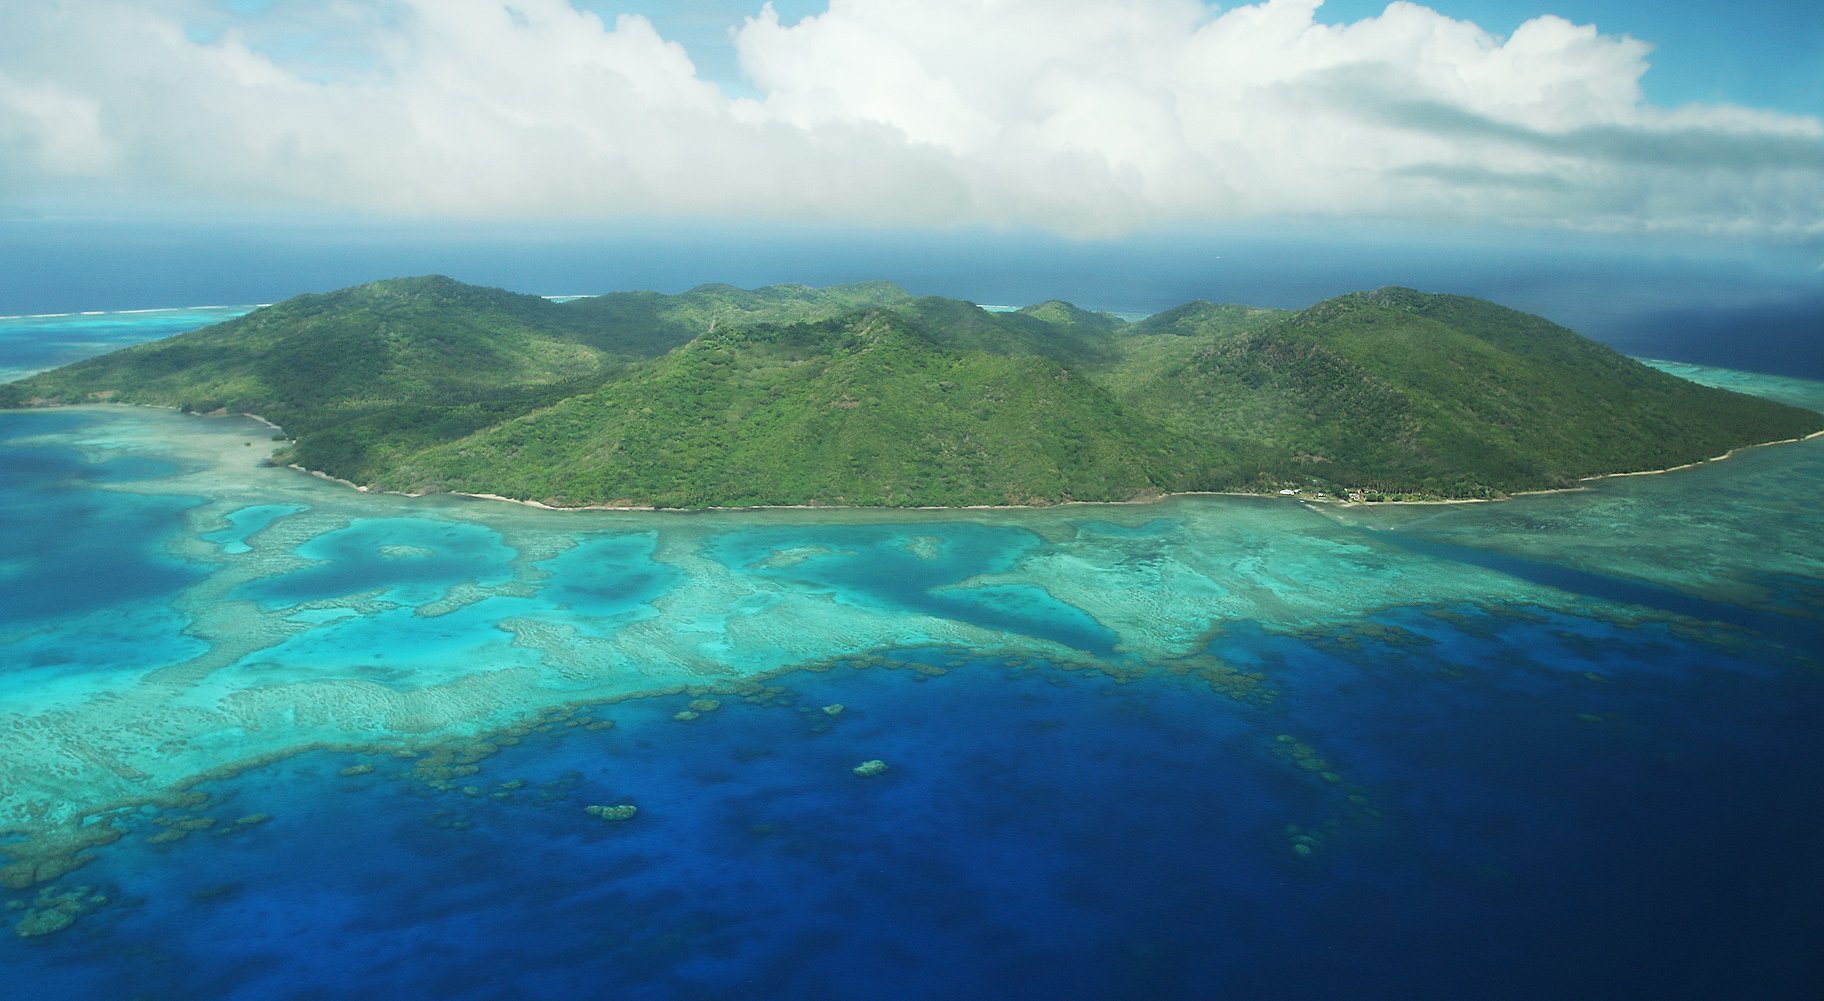 Середина тихого океана. Острова Лау, Фиджи. Фиджи Атолл. Каролинские острова Атолл. Коморские острова (архипелаг).